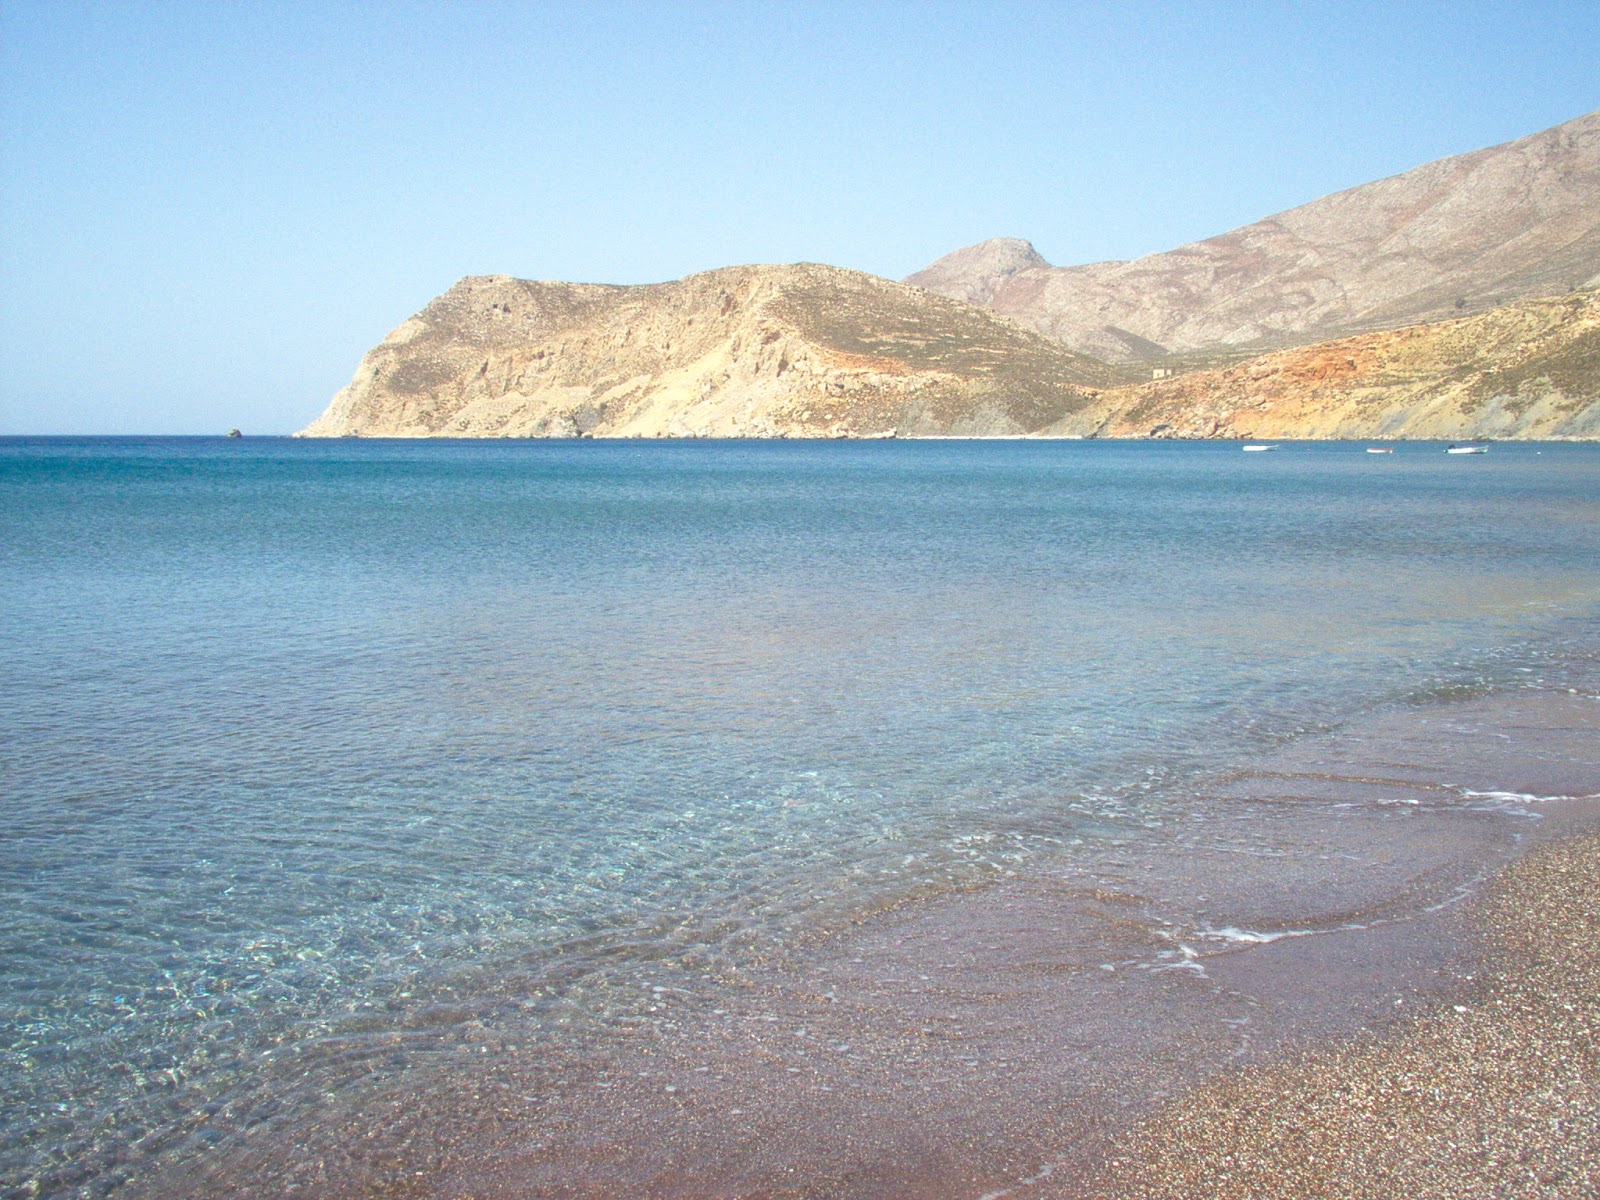 Fotografija Eristos beach z prostoren zaliv